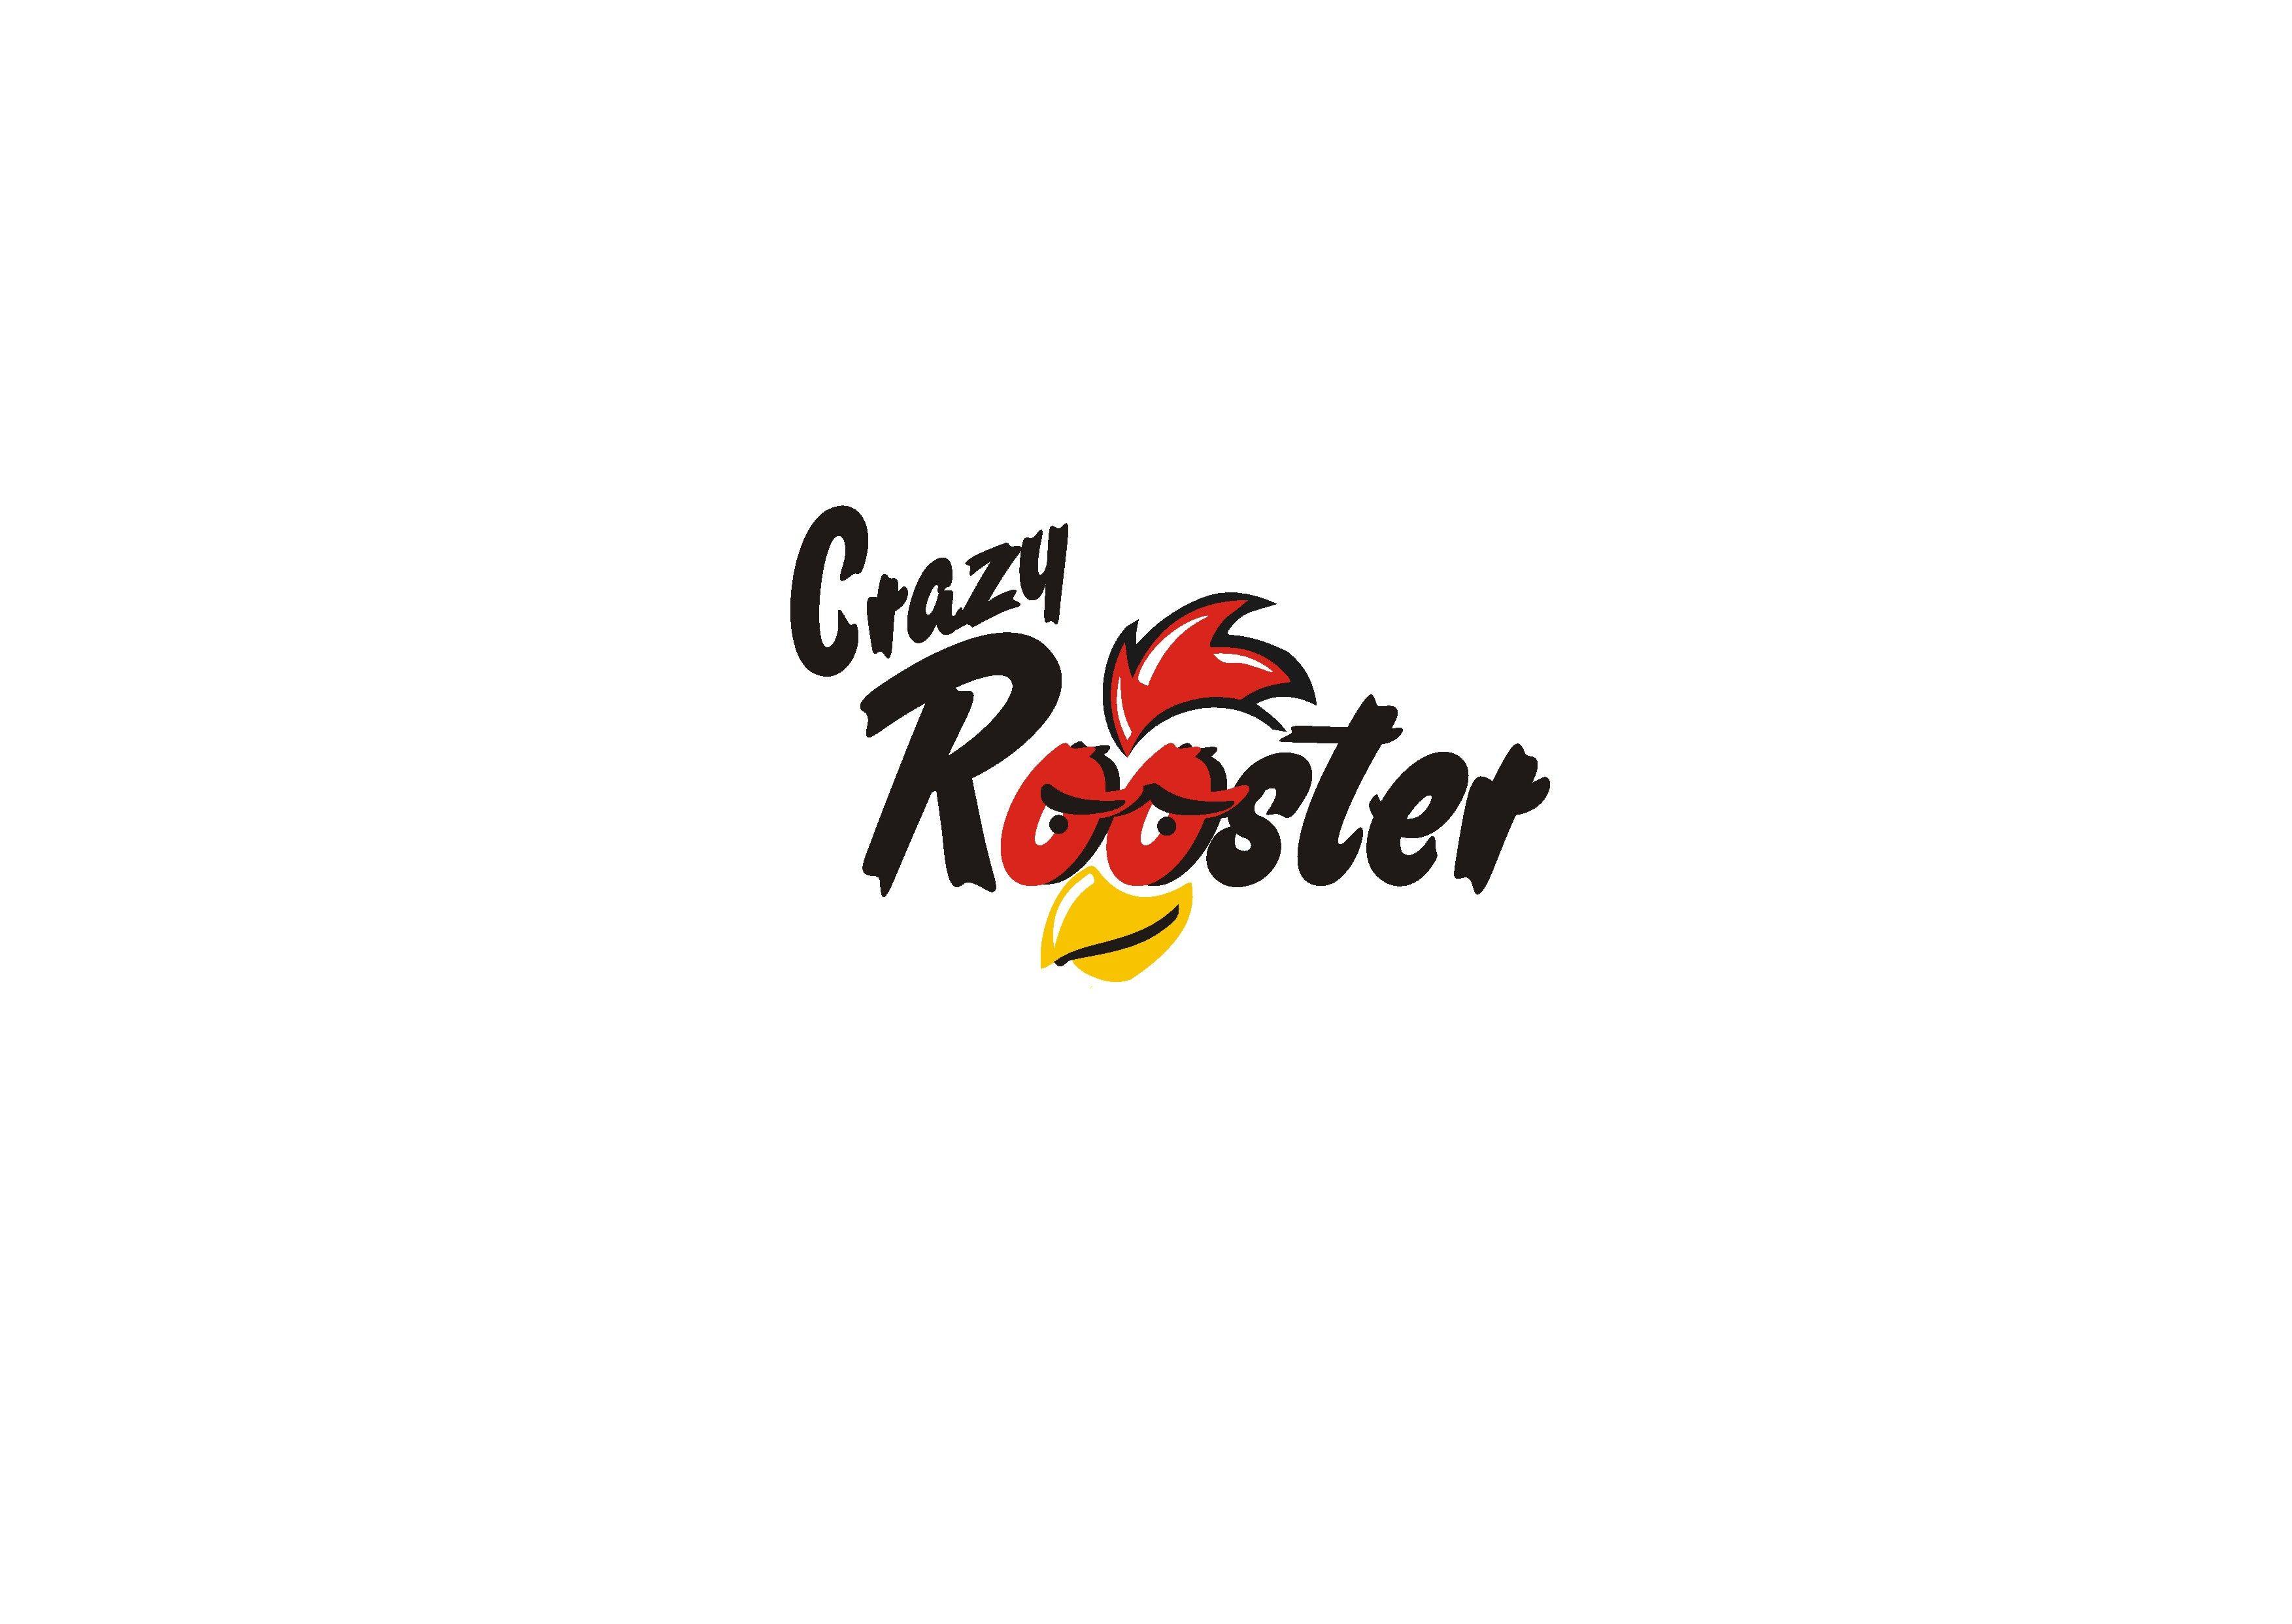 Roster Logo - Crazy roster - logo design | Freelancer